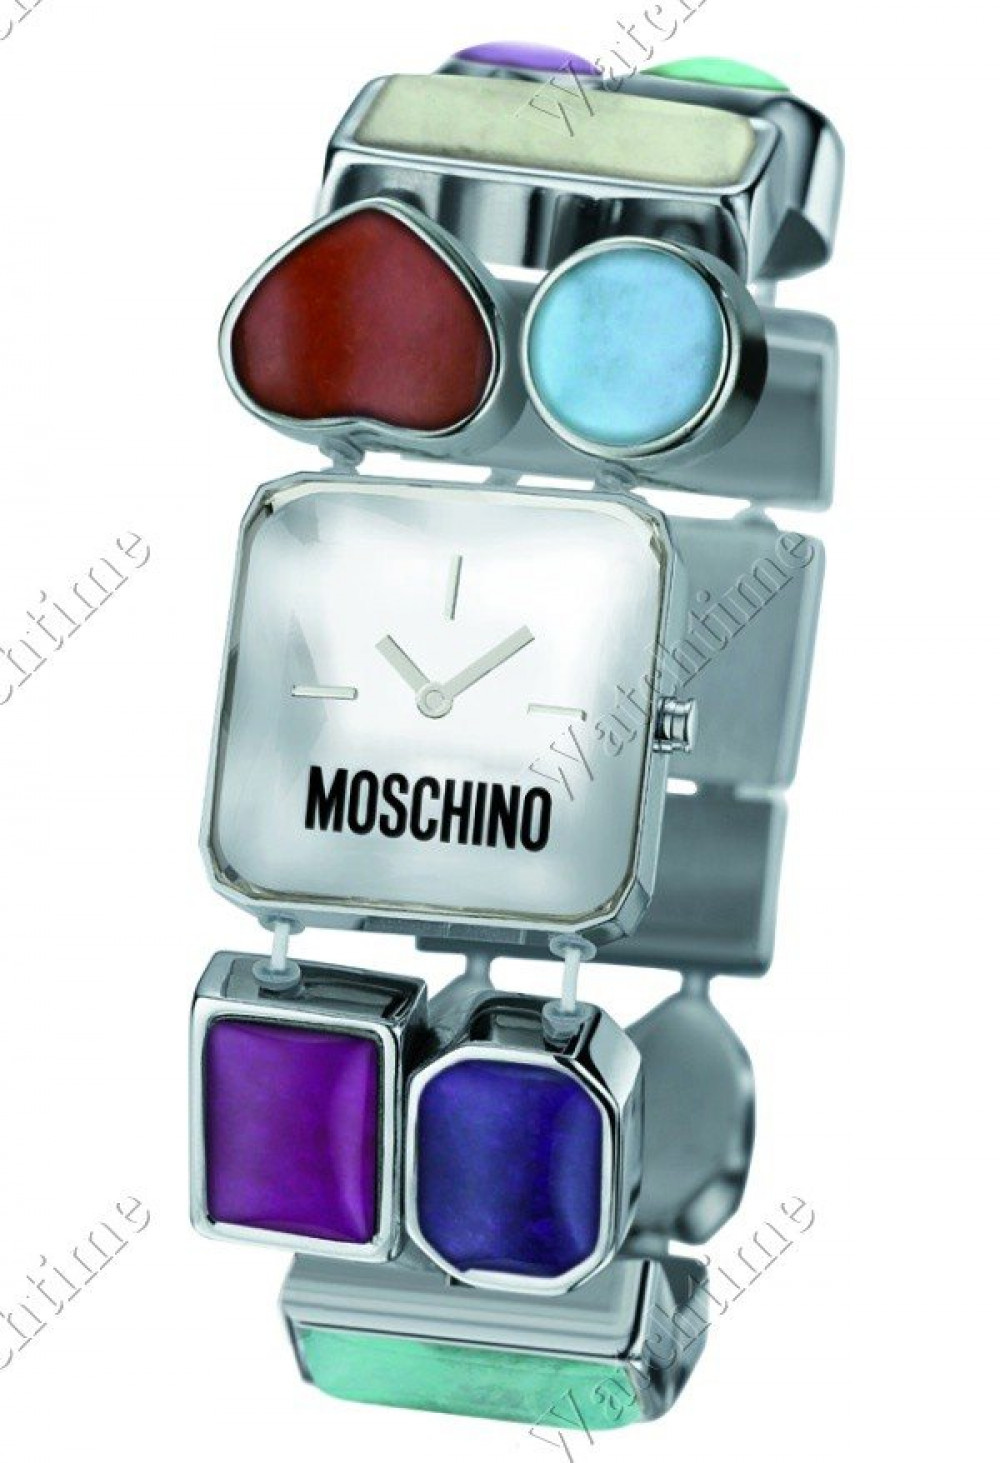 Zegarek firmy Moschino Hours & Minutes, model High Crystal